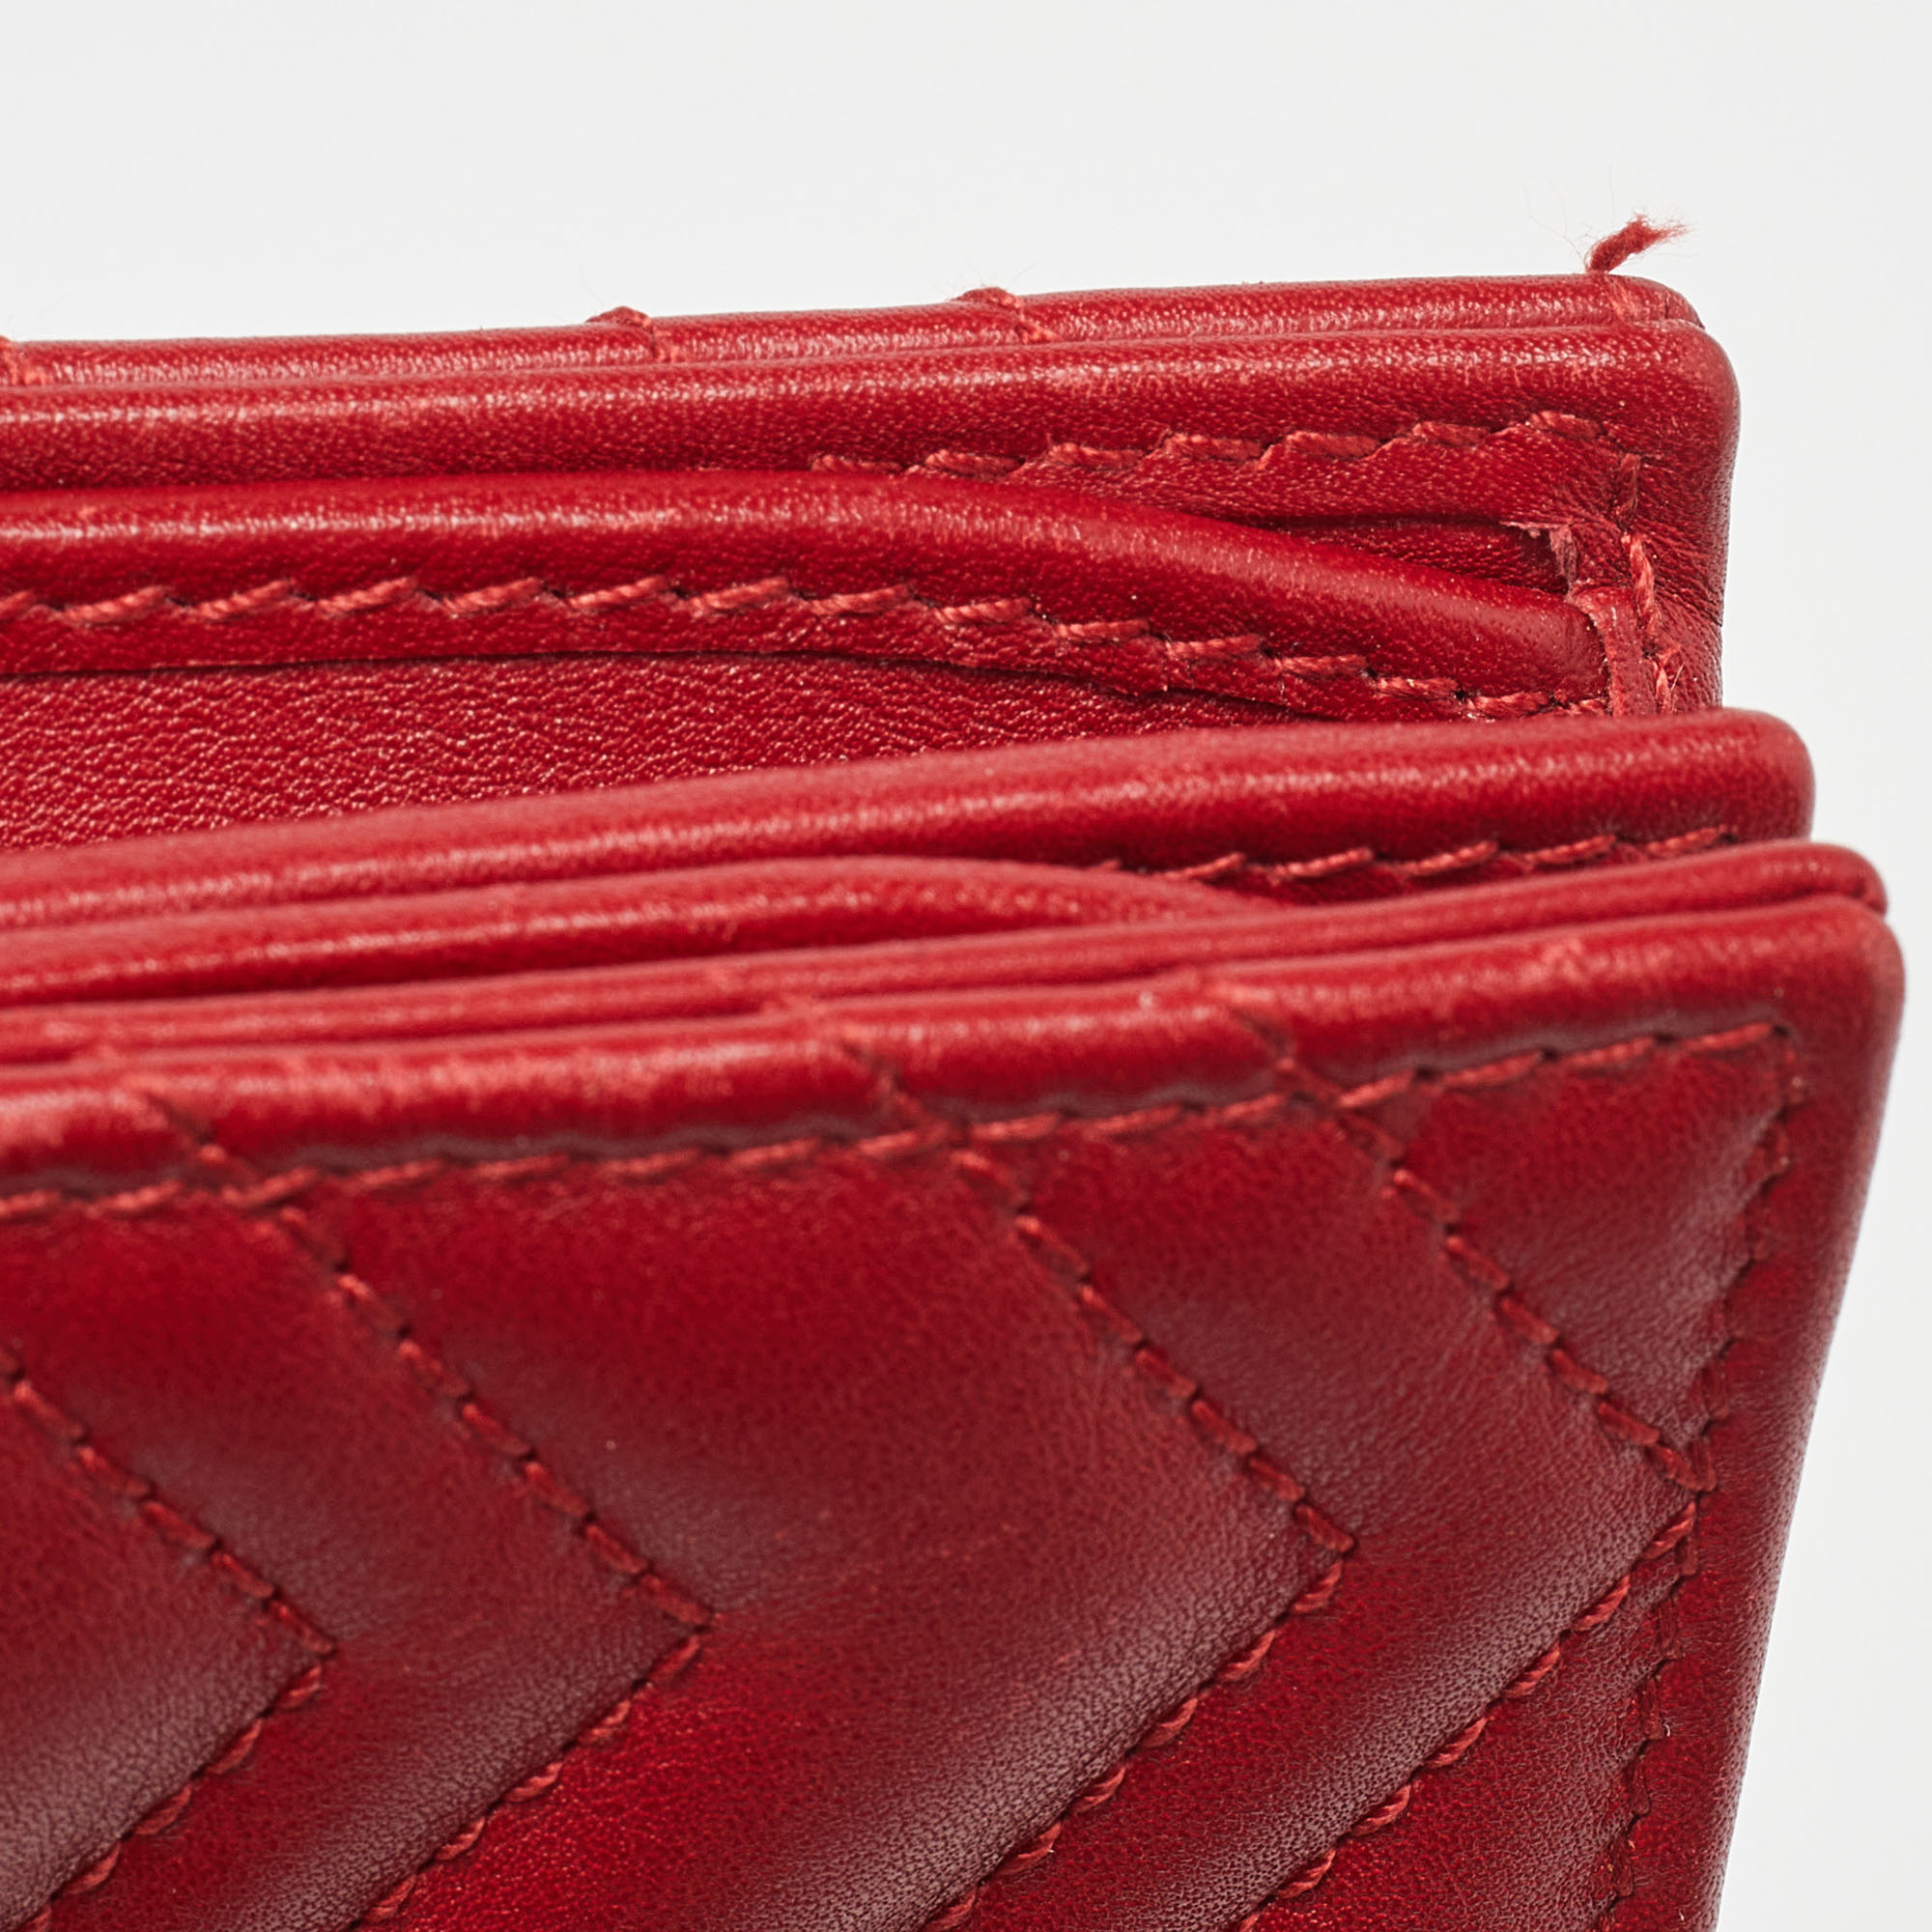 Gucci Red Matelassé Leather GG Marmont Flap Card Case